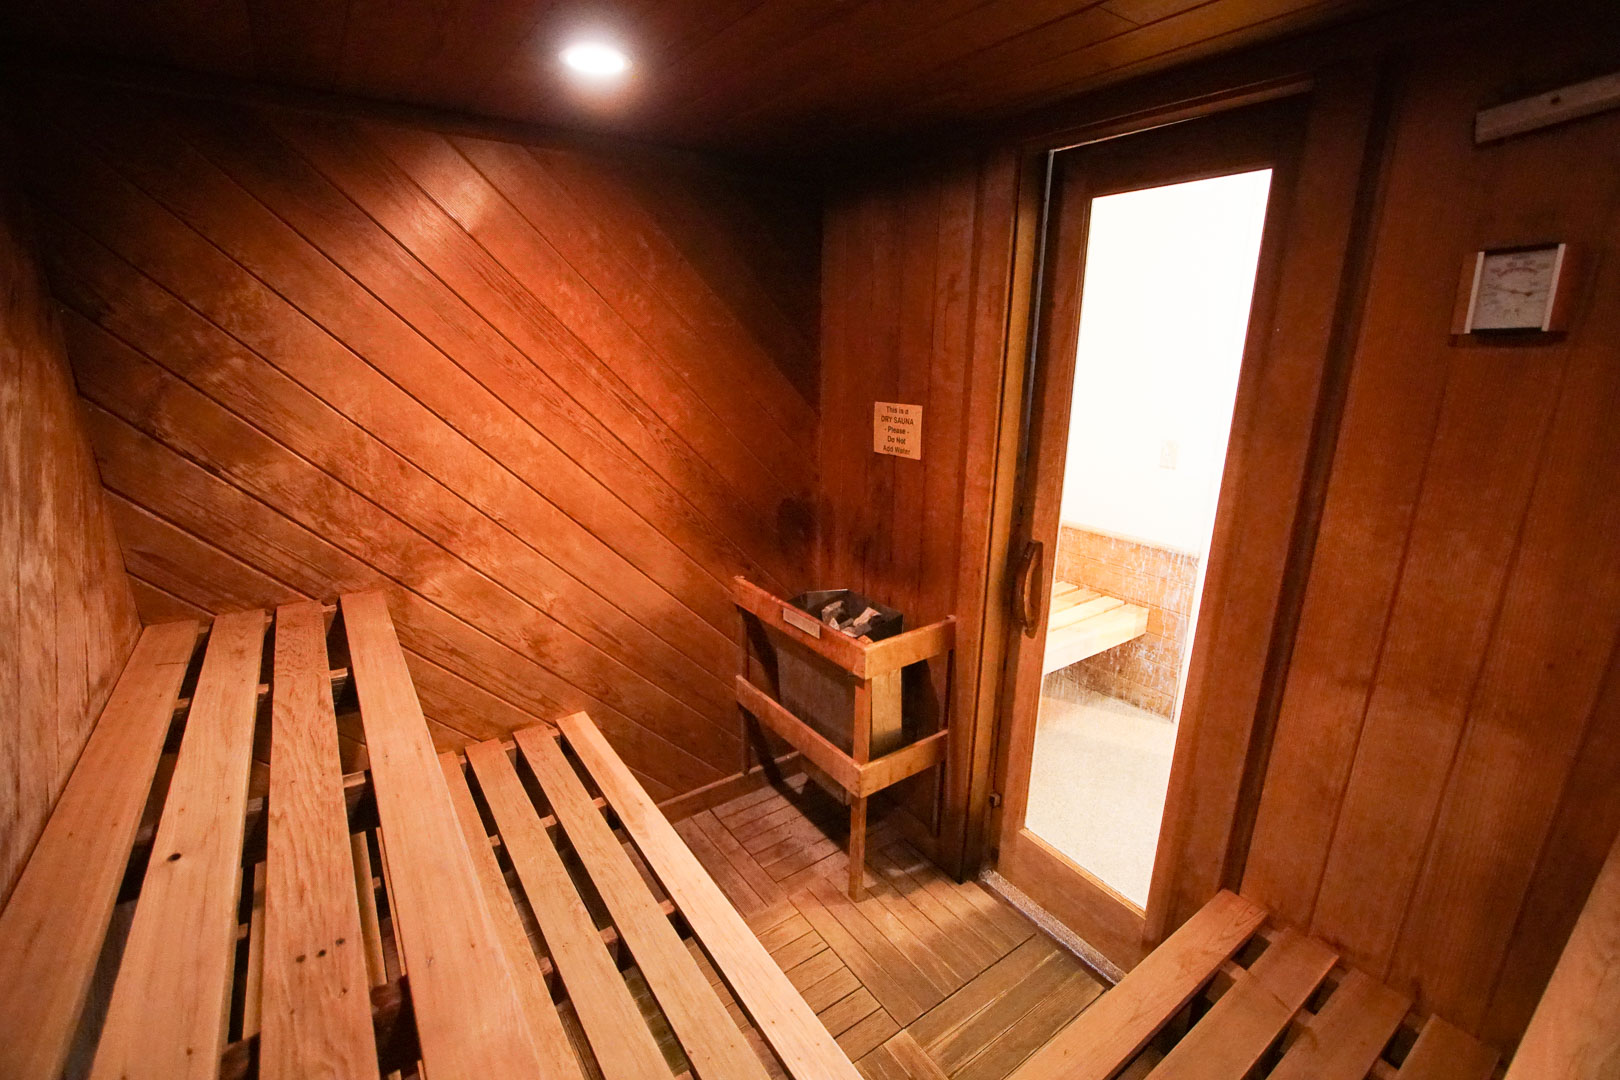 A relaxing hot sauna room at VRI's Brewster Green Resort in Massachusetts.